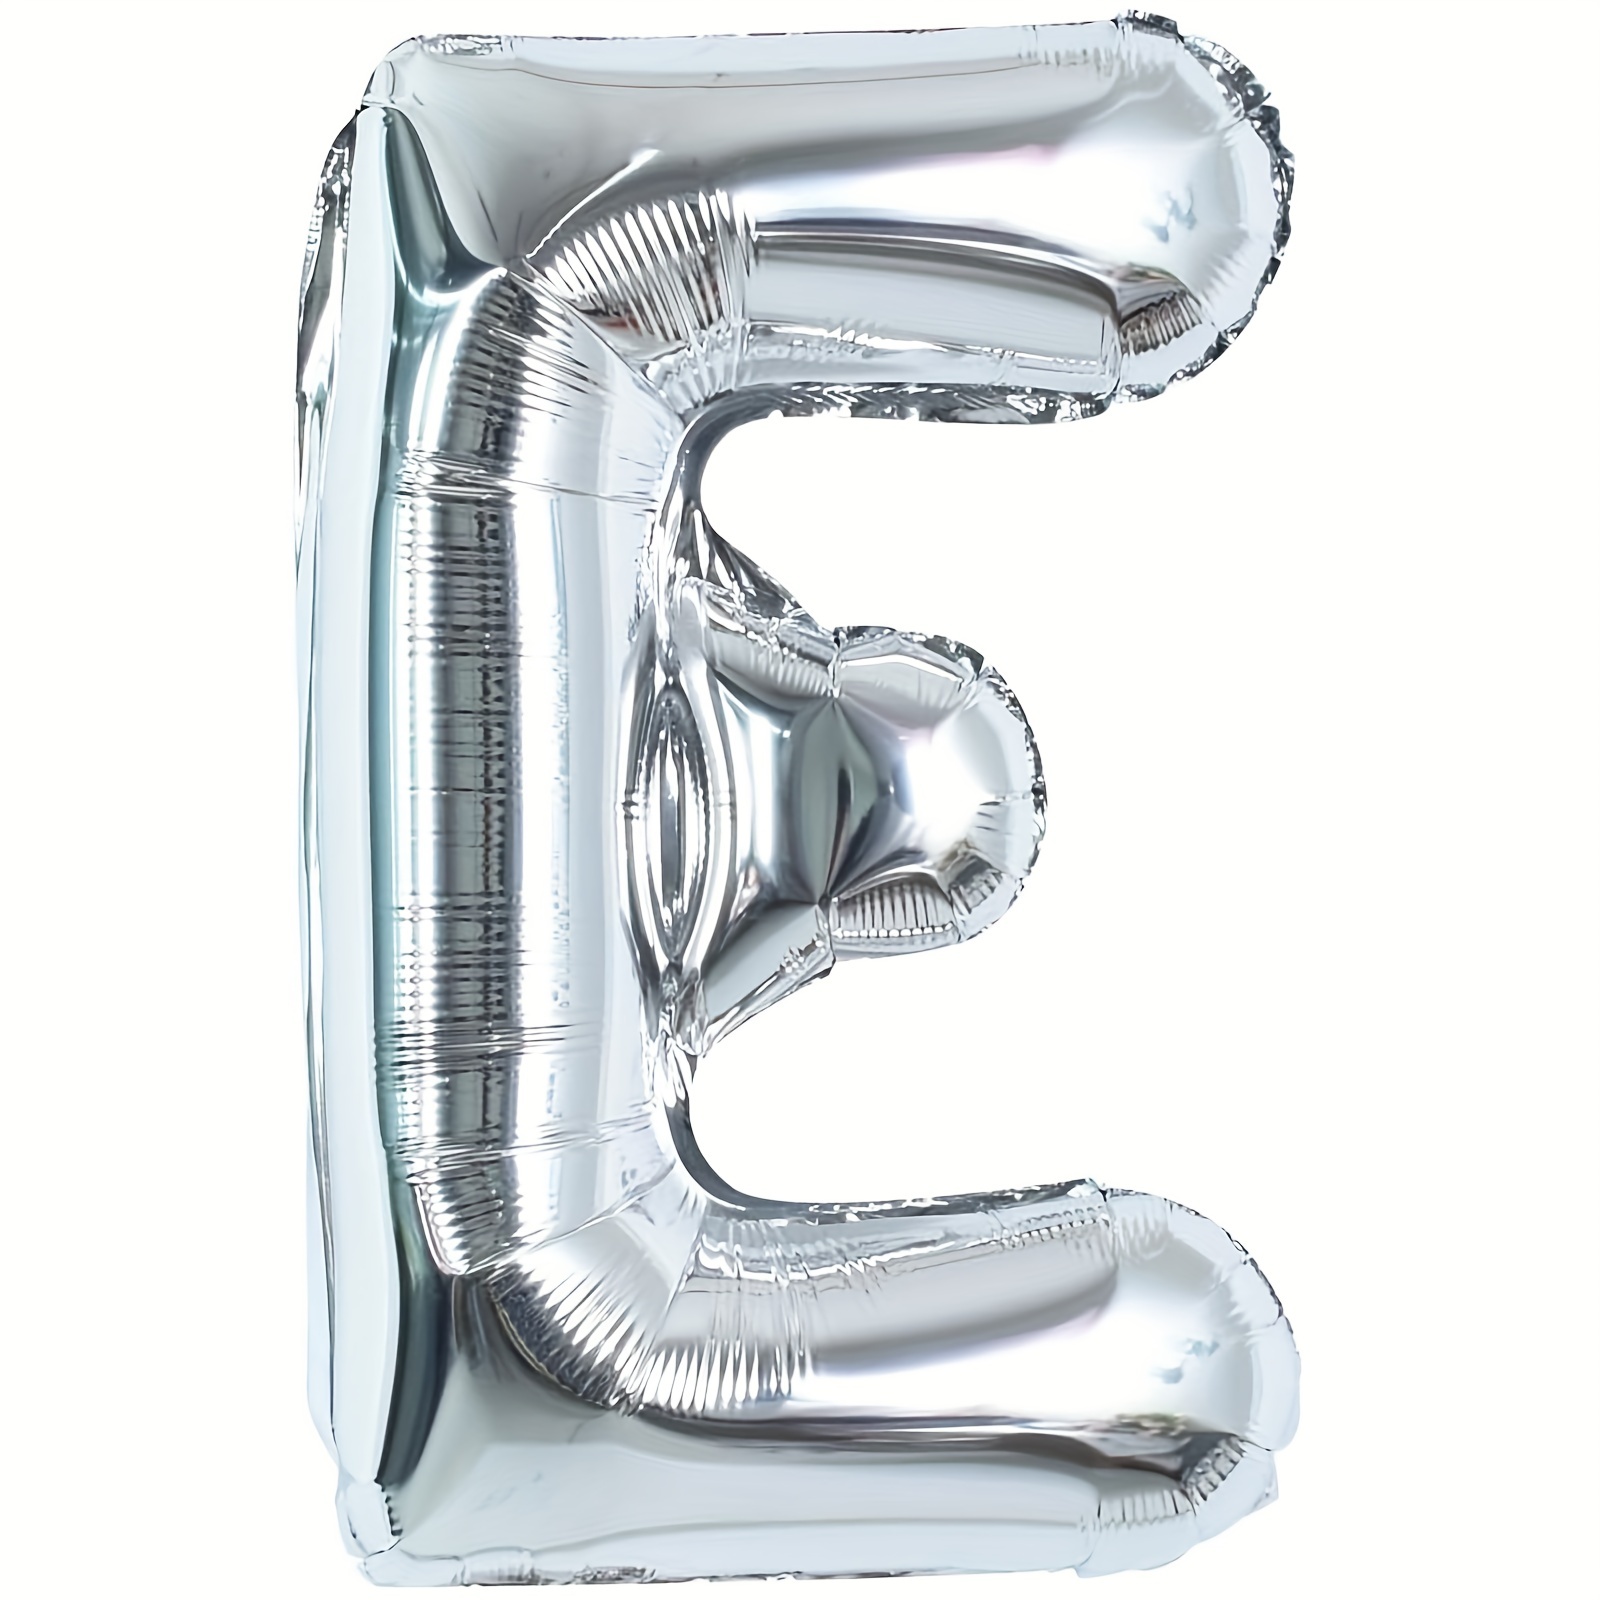 Petit ballon en aluminium lettre G or petit mylar alphabet